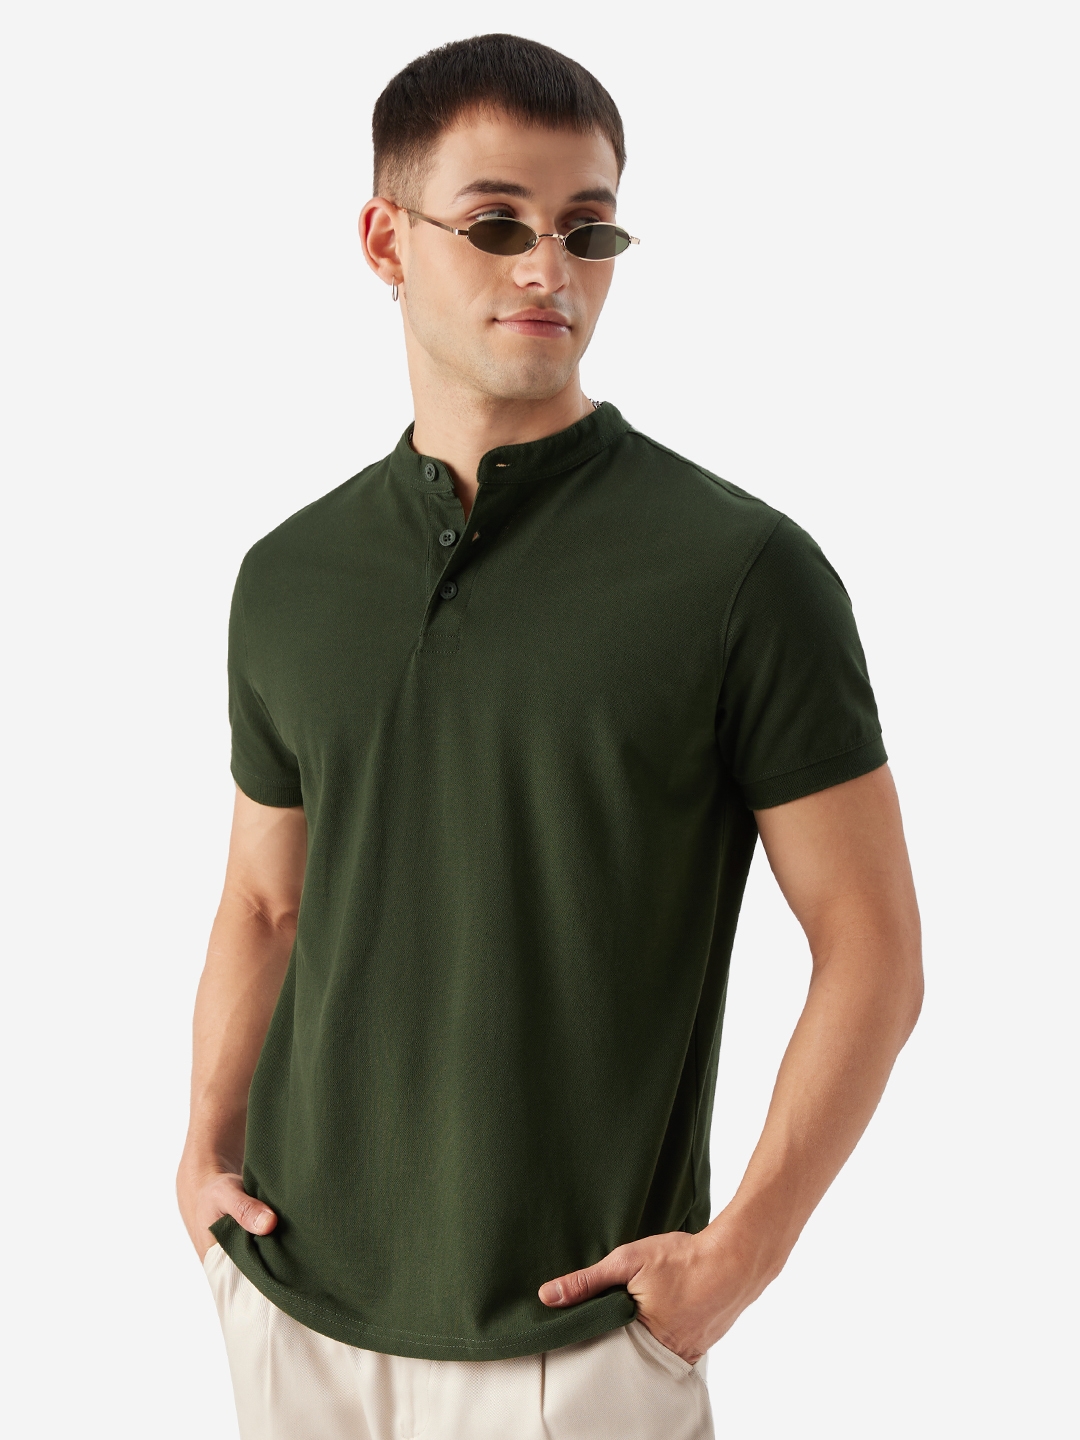 Men's Solids: Dark Green Mandarin Polo T-Shirt